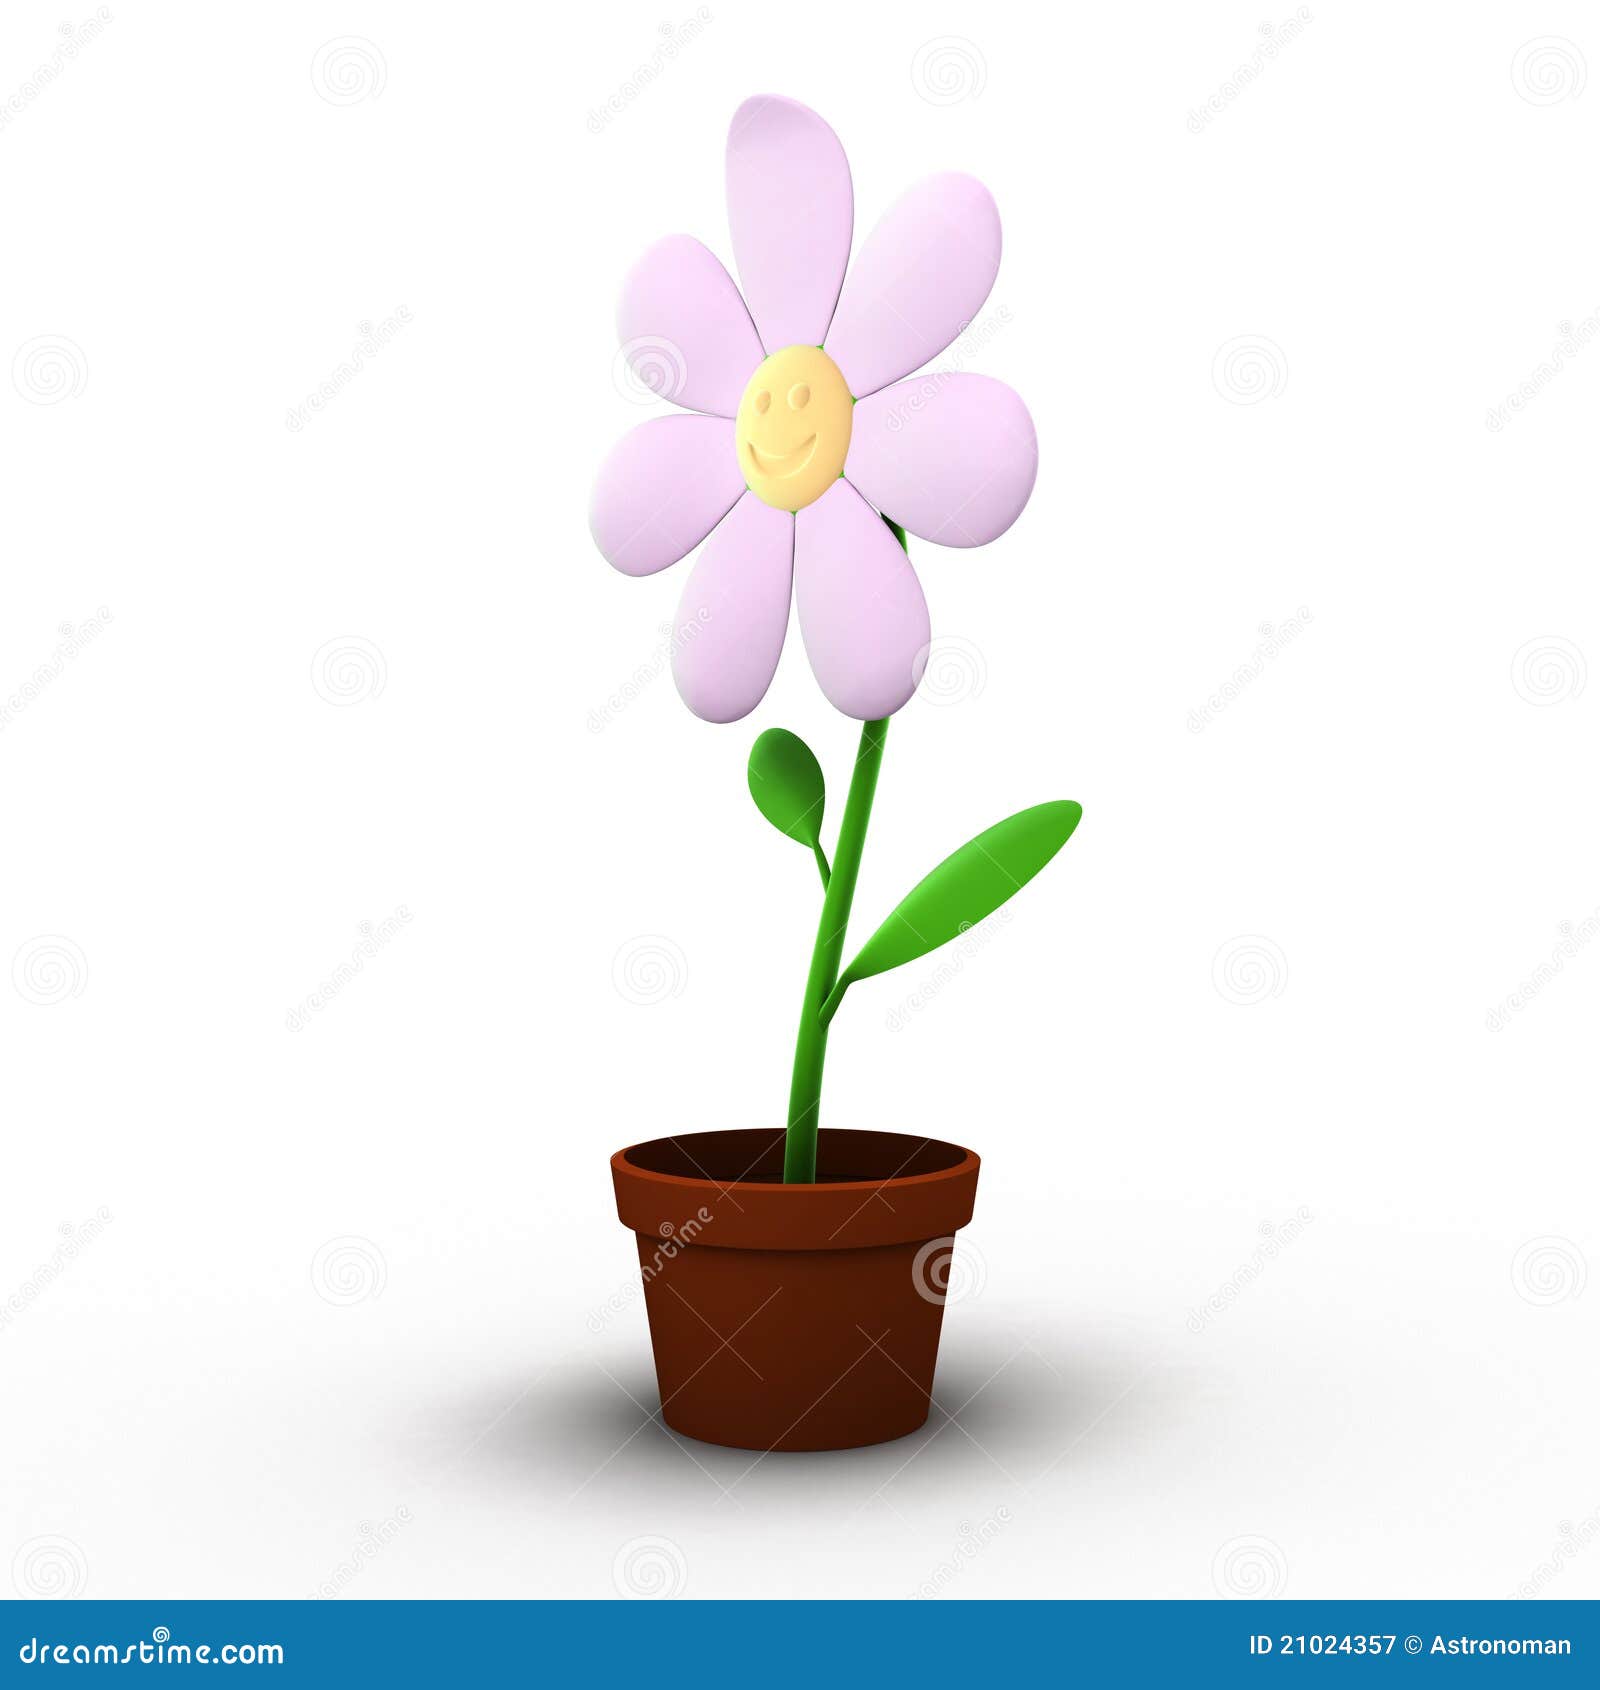 Flower stock illustration. Illustration of plant, green - 21024357